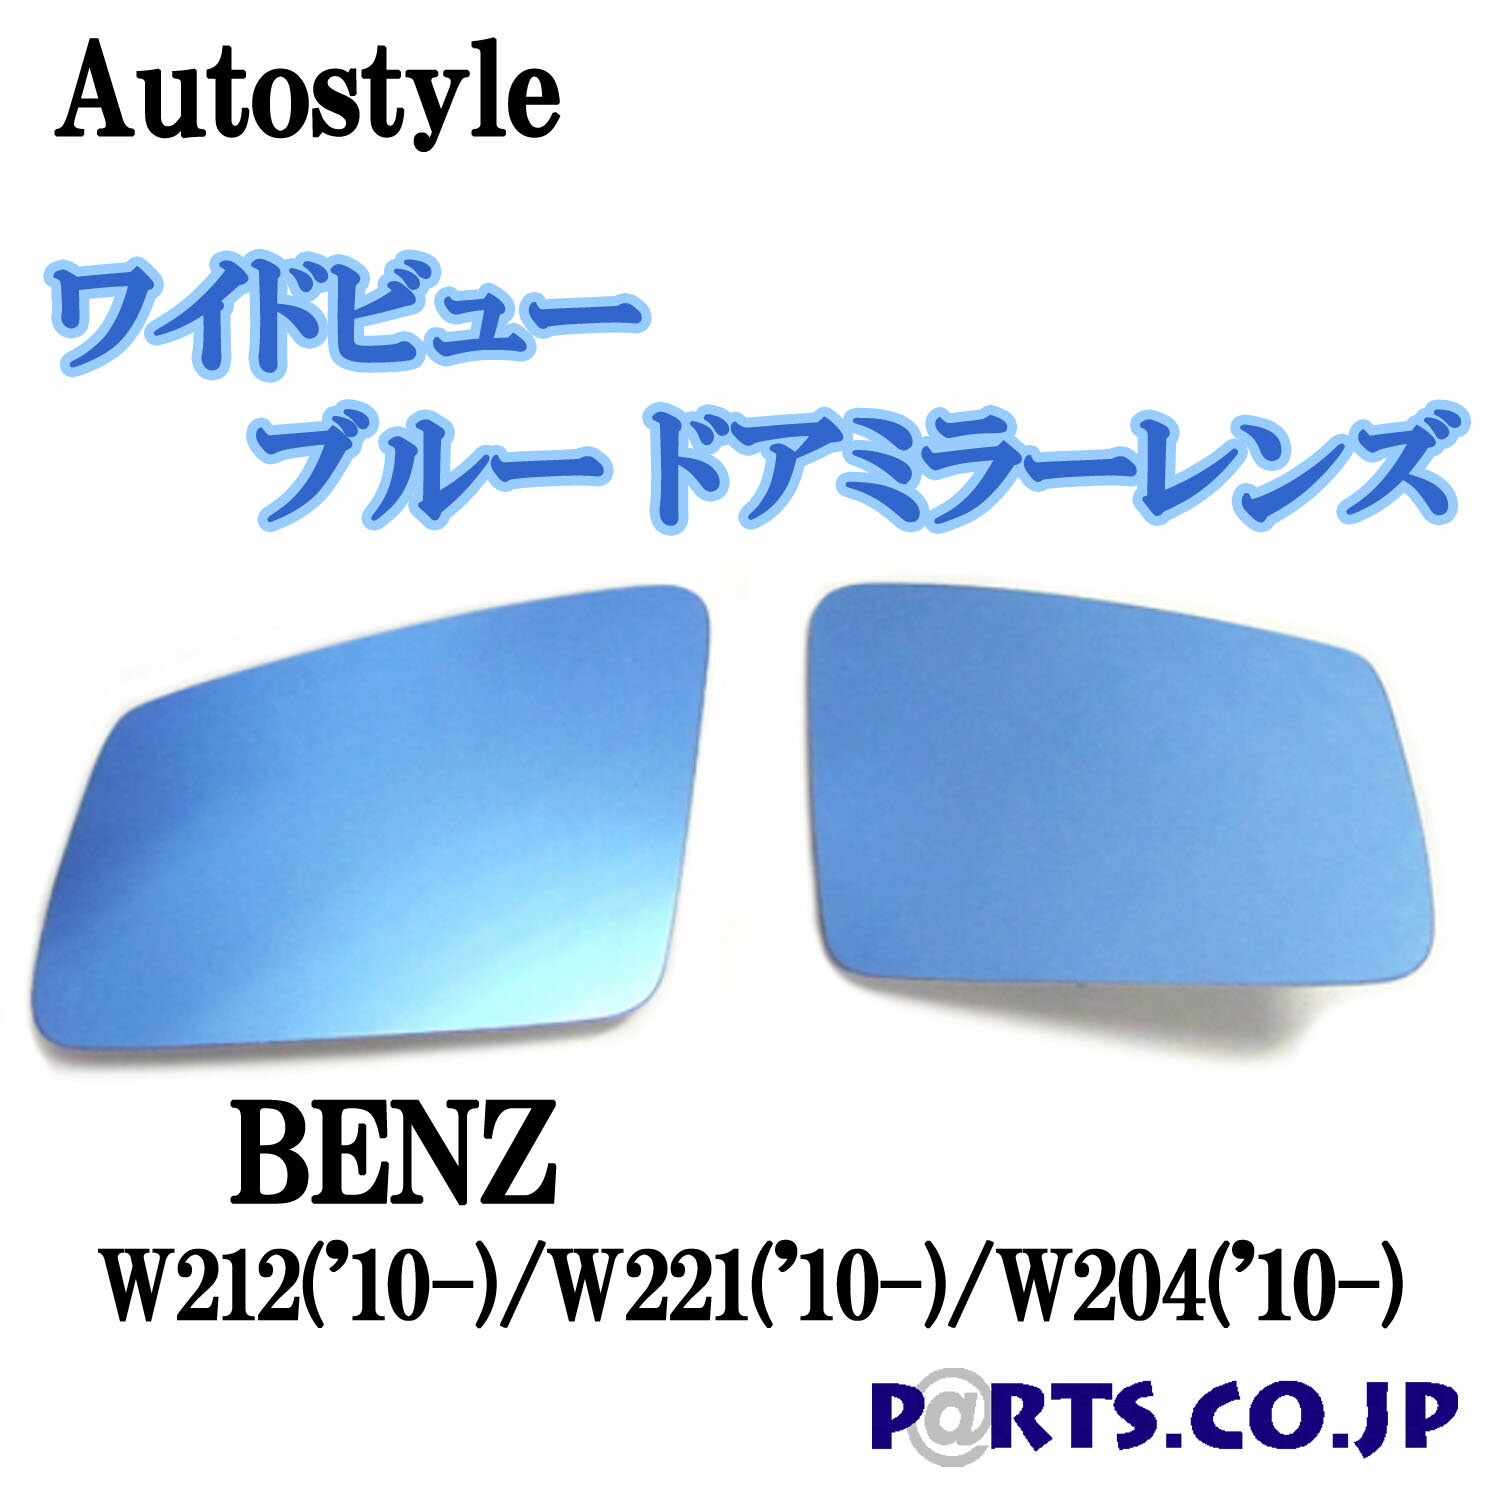 Autostyle ワイドビュー ブルー ドアミラーレンズ BENZ ベンツ W212( 039 10-)/W221( 039 10-)/W204( 039 10-) 代引き不可